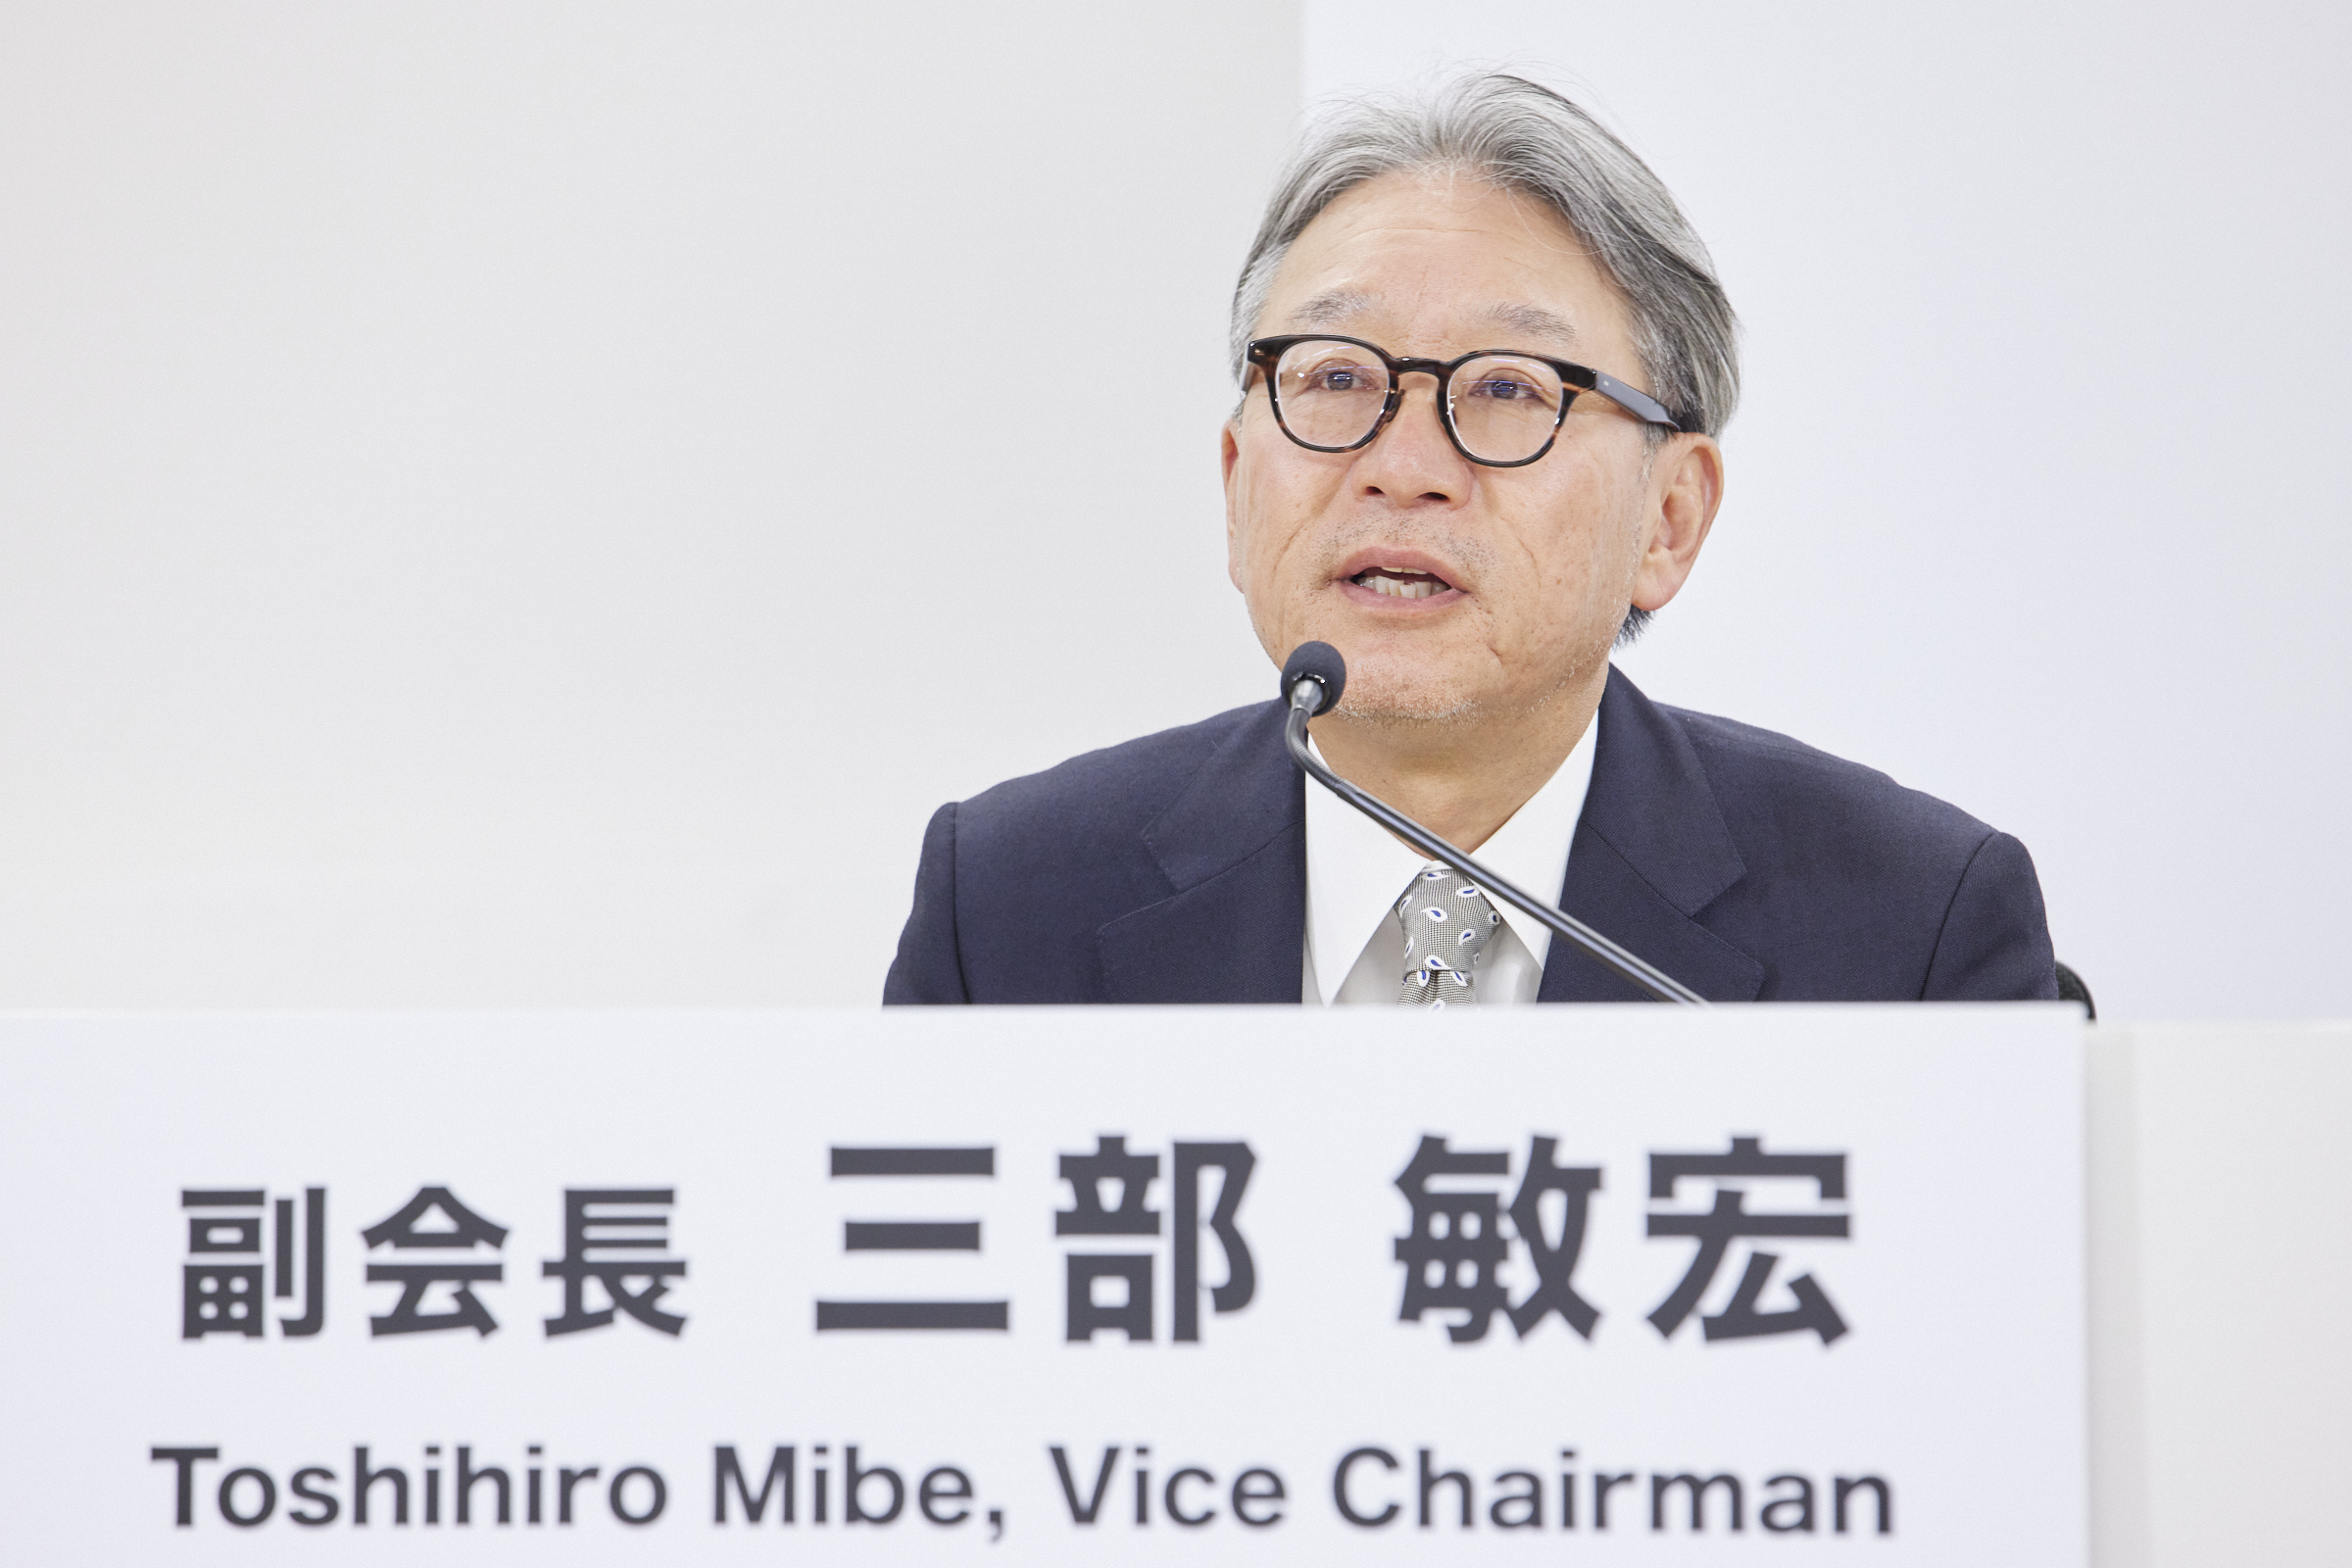 MIBE Toshihiro, Vice Chairman (President and CEO, Honda Motor Co., Ltd.) 